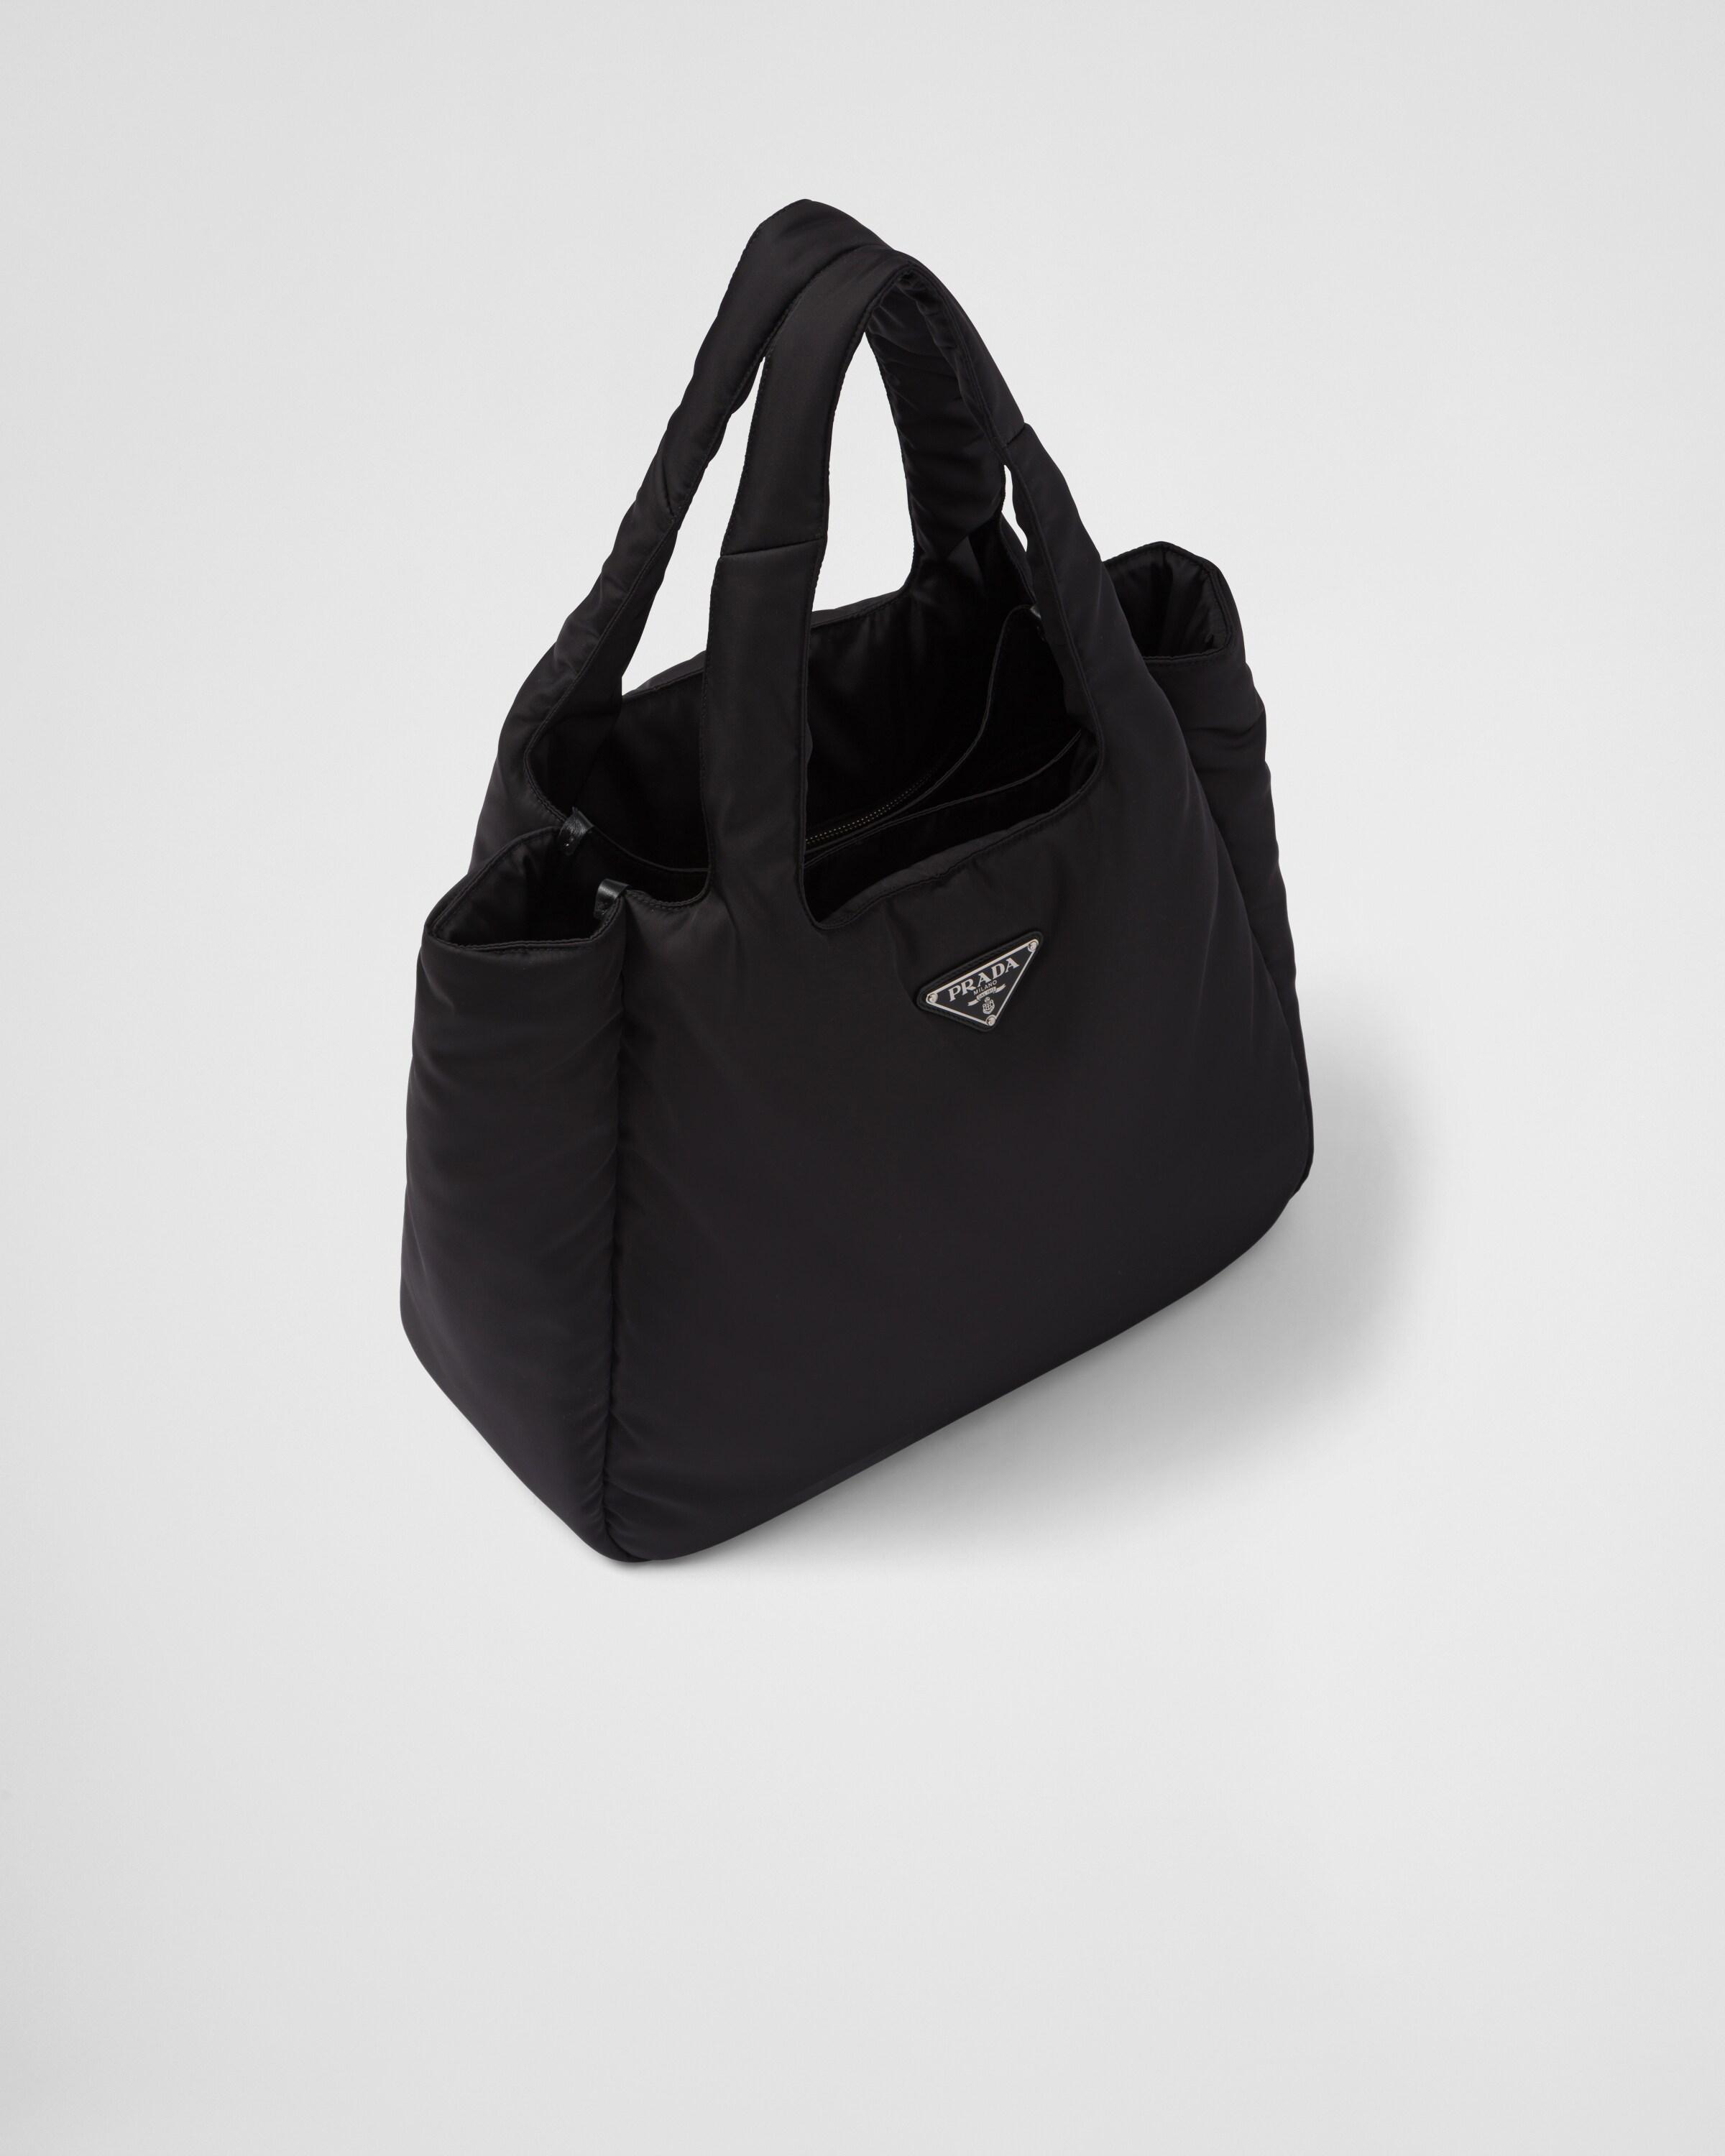 Prada - Men's Leather Tote Bag with Shoulder Strap - Black - Synthetic